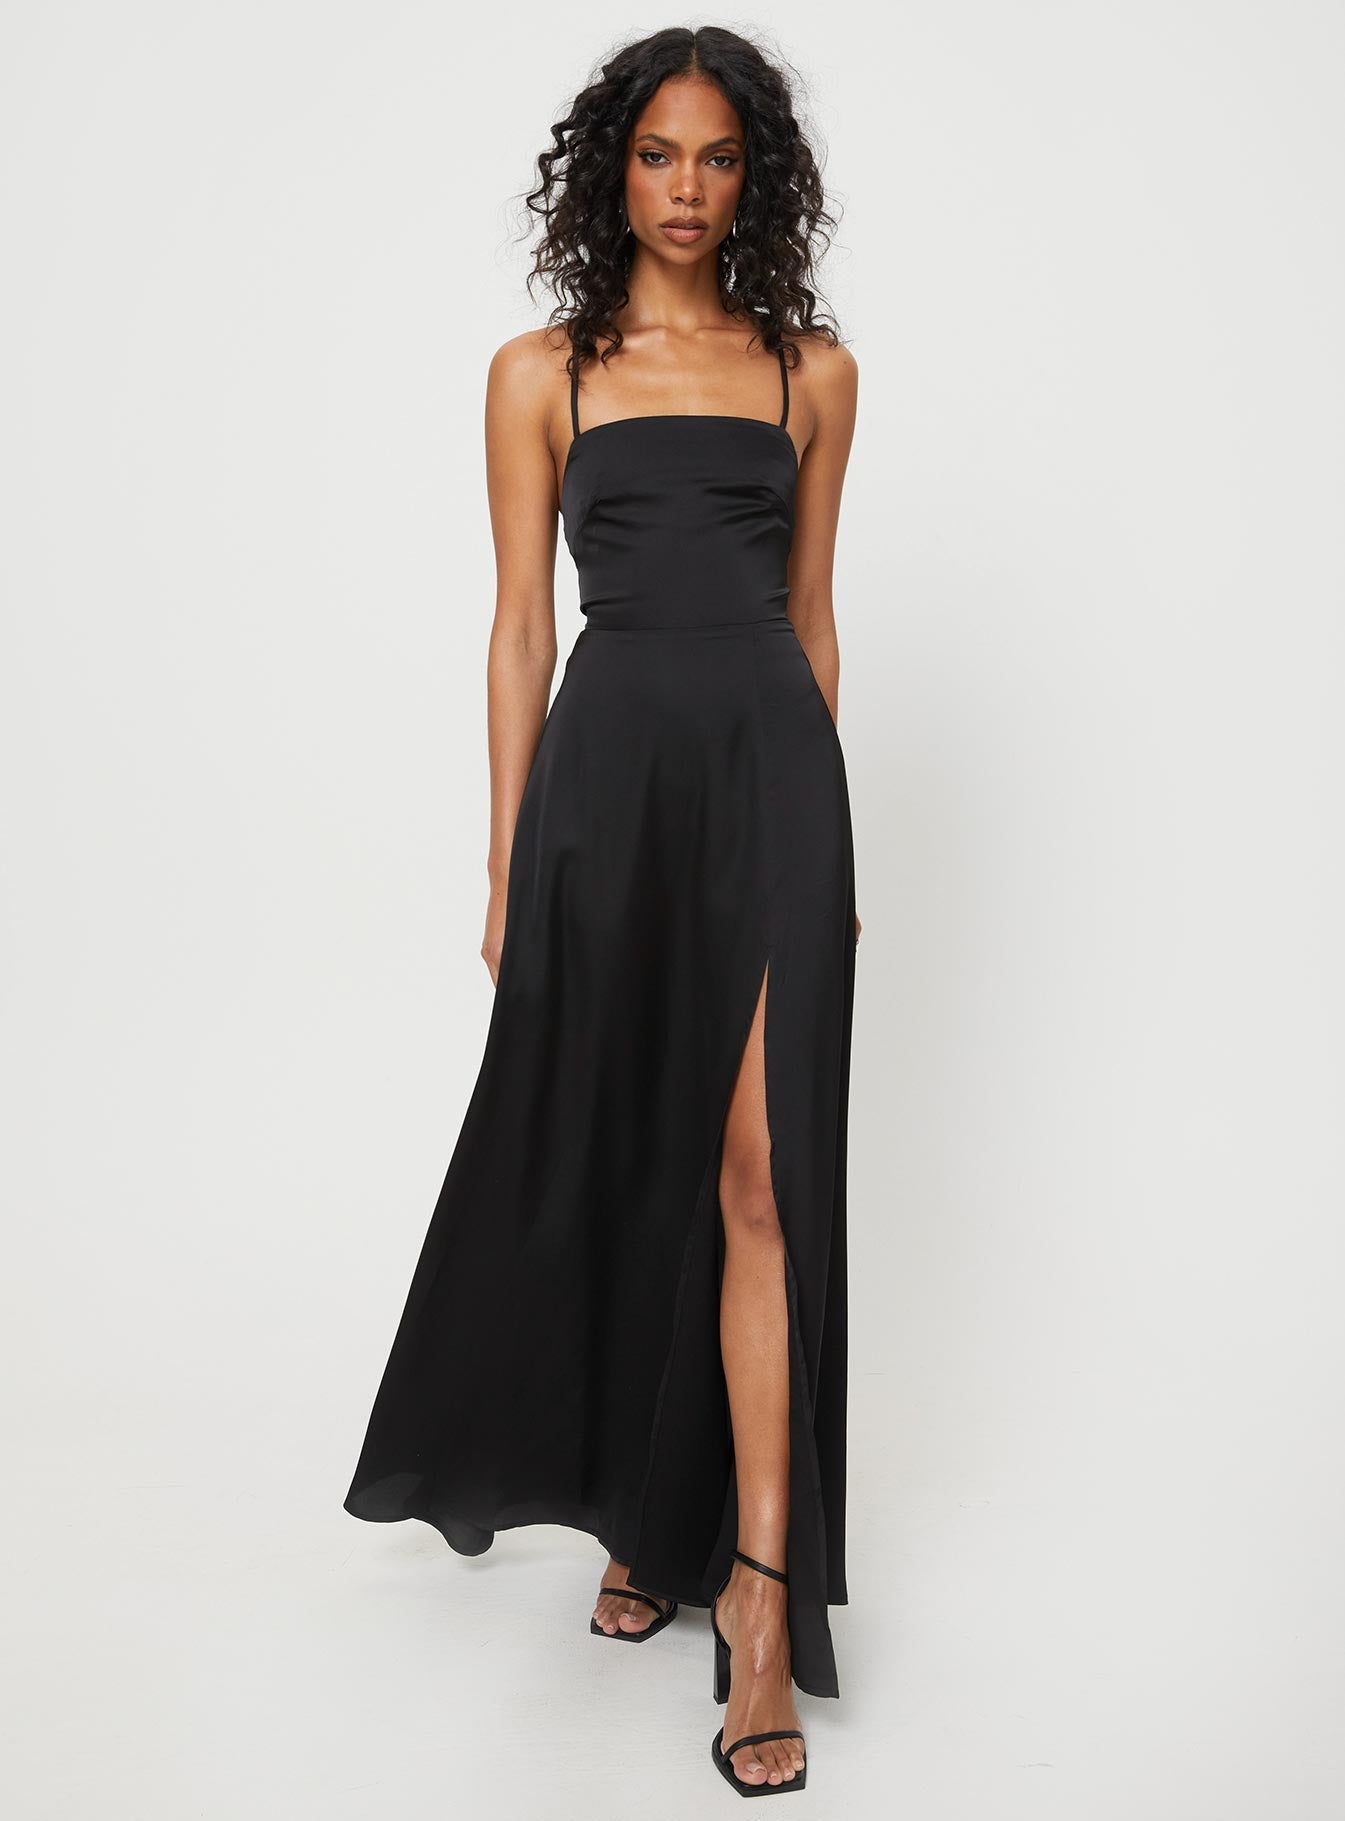 Shop Formal Dress - Kerwin Maxi Dress Black fifth image